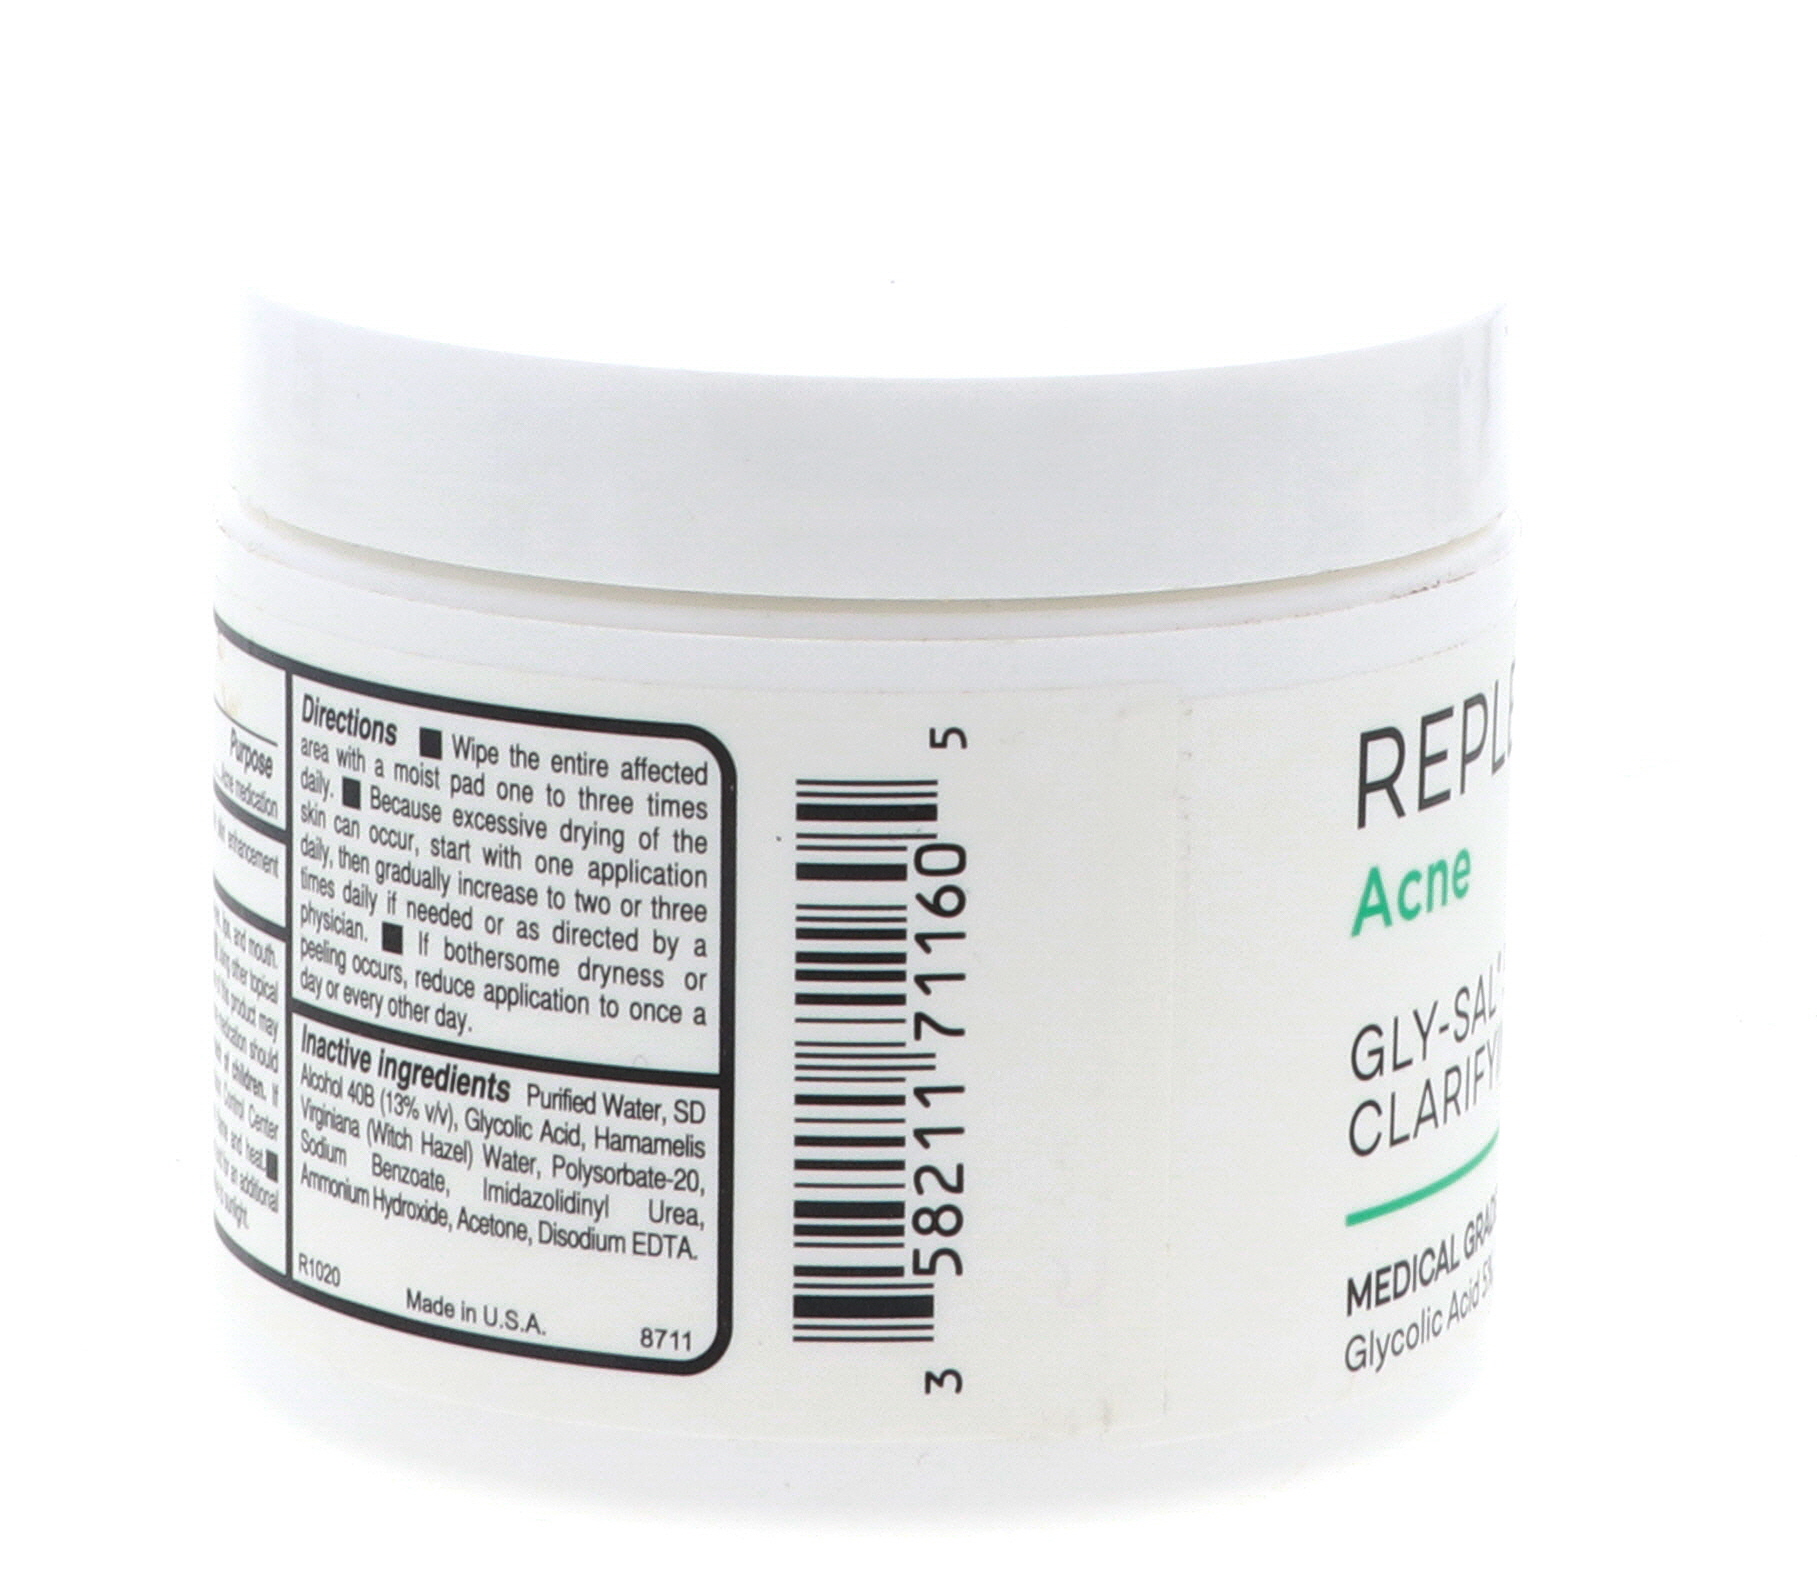 Replenix Gly-Sal 5-2 Clarifying Pads, 60 pads - image 3 of 4